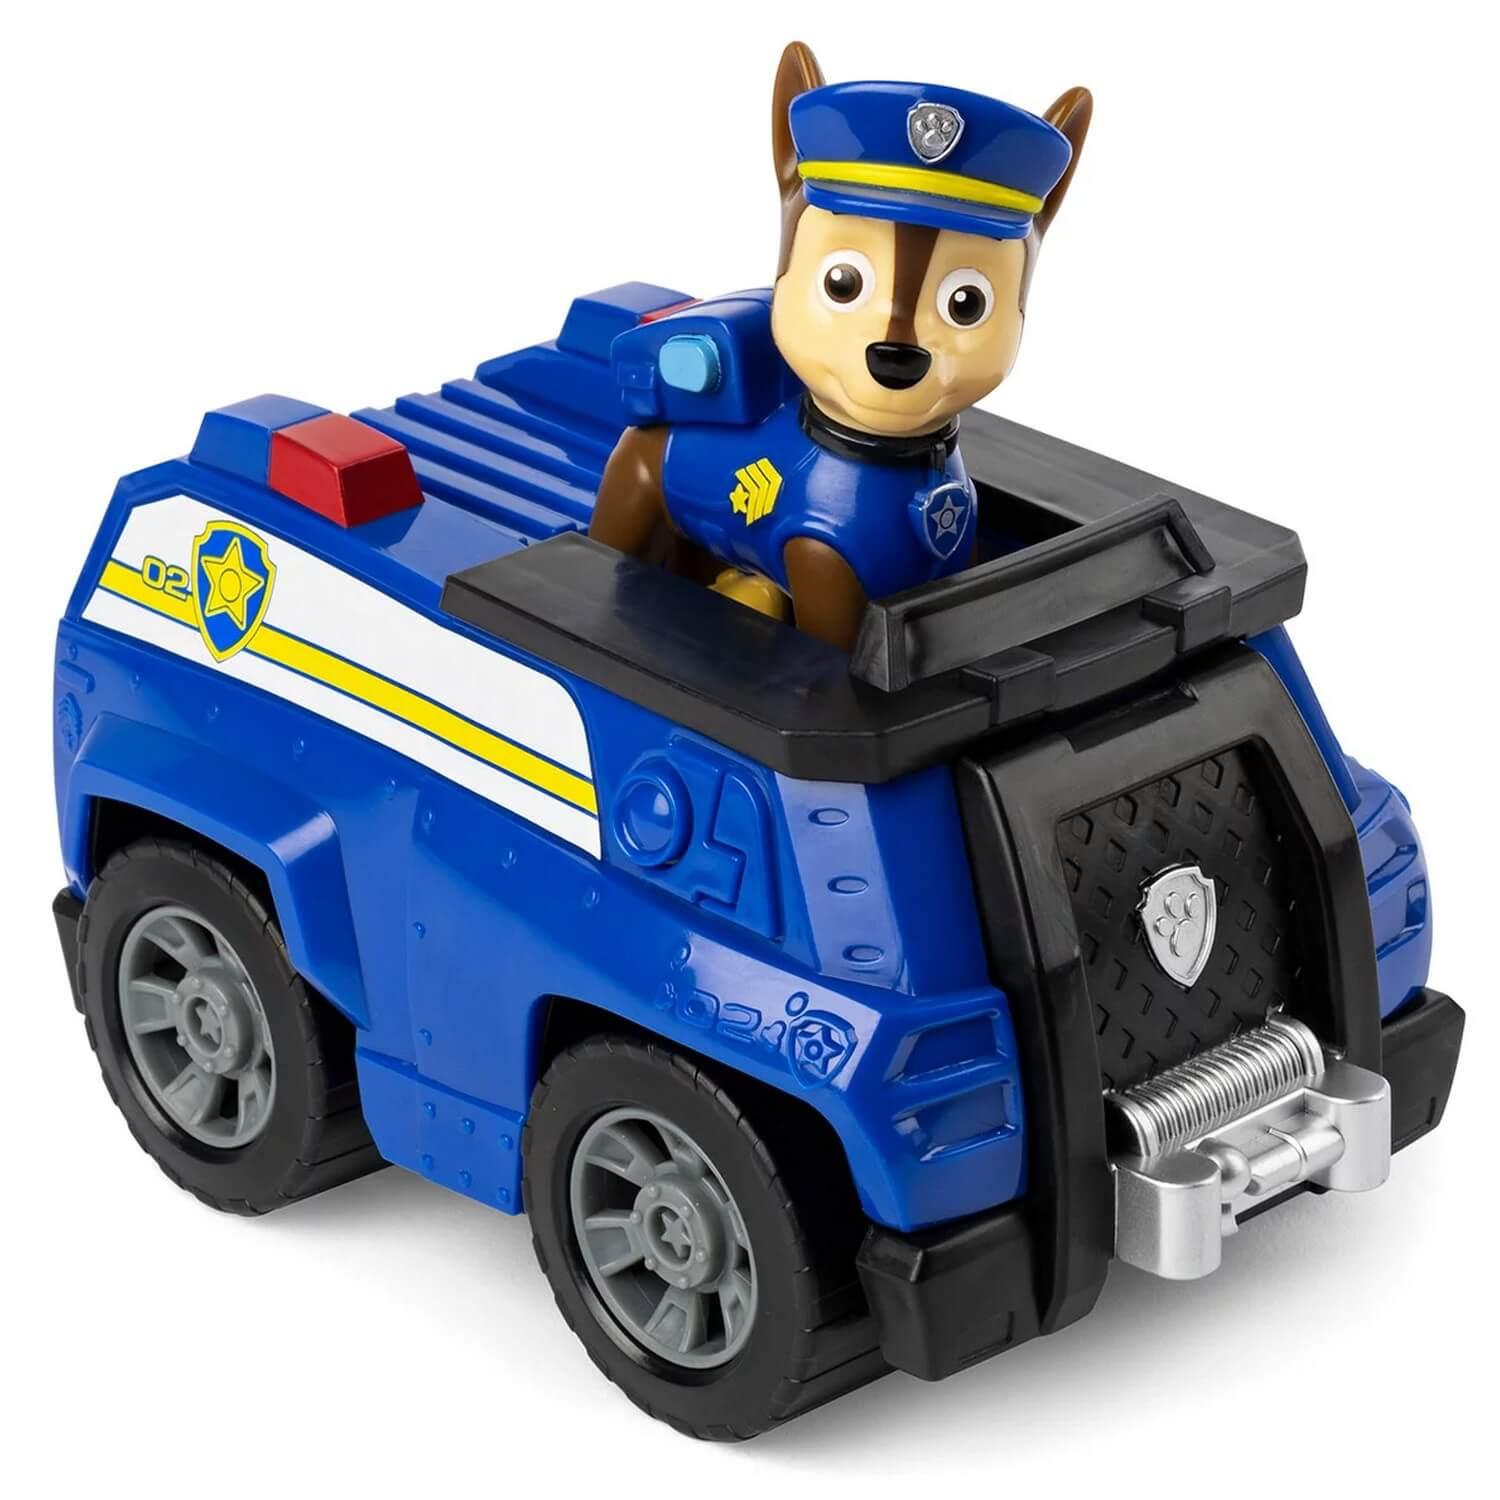 Pat patrouille - vehicule + figurine amovible stella paw patrol